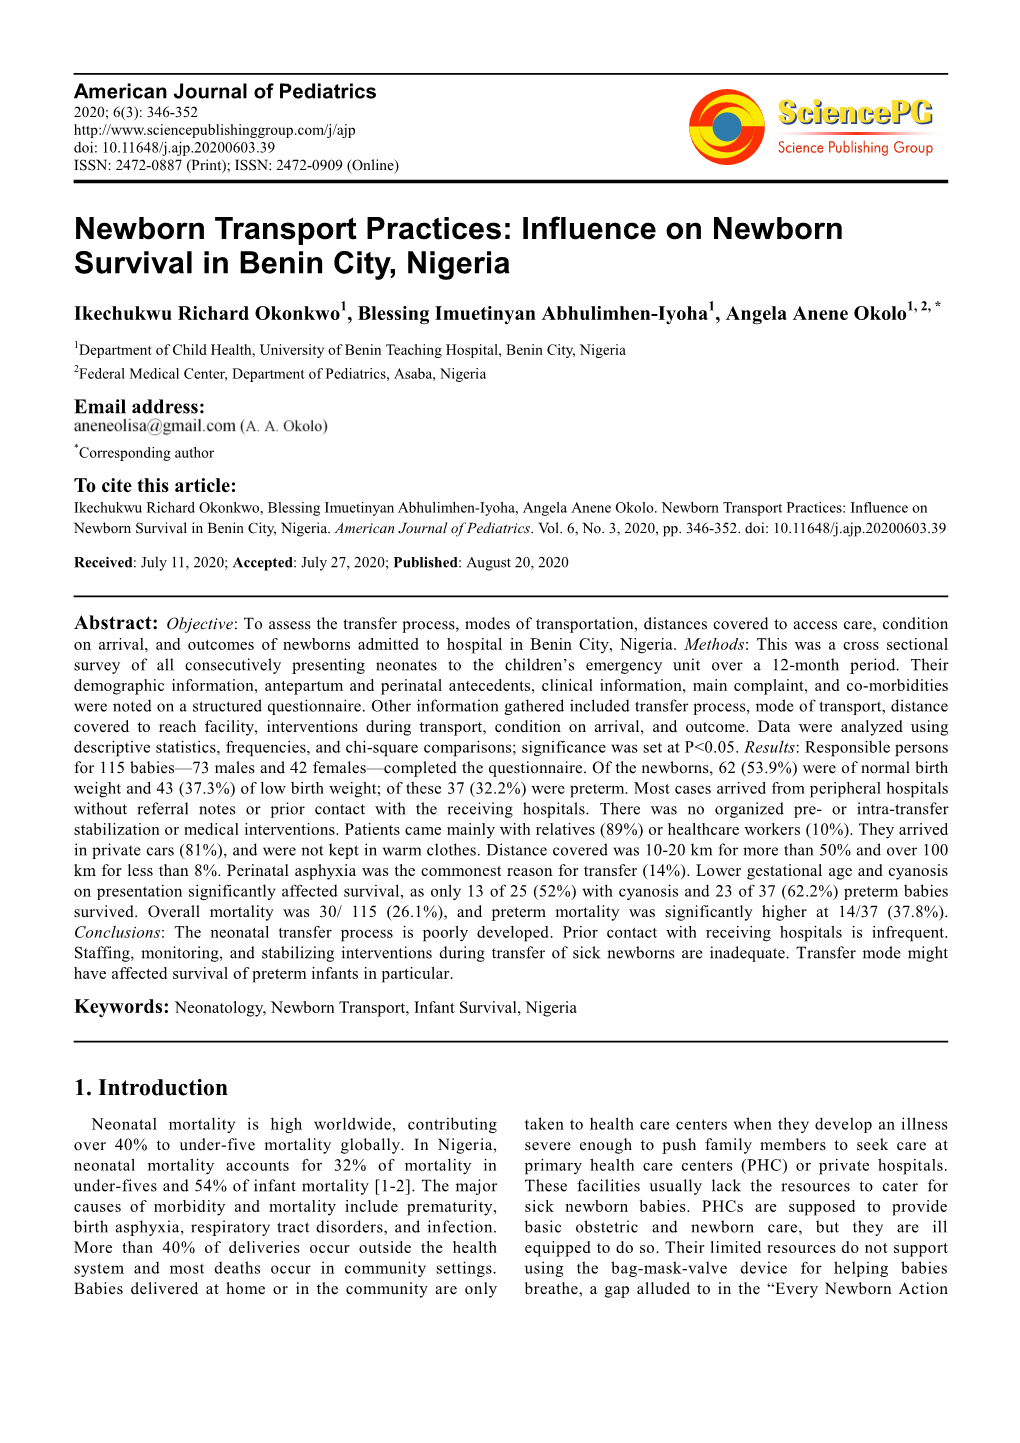 Newborn Transport Practices: Influence on Newborn Survival in Benin City, Nigeria